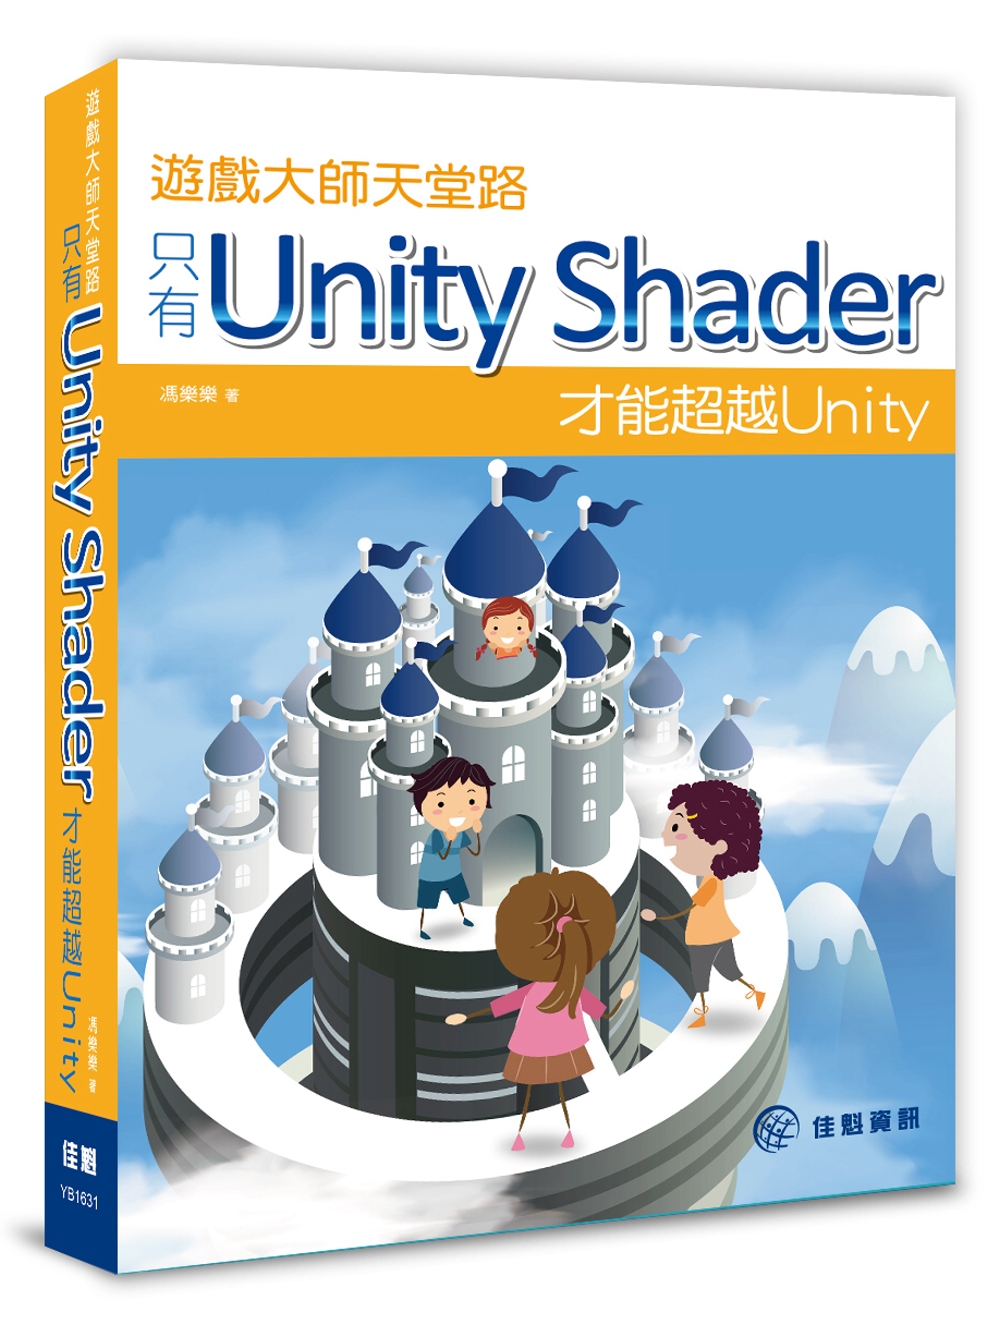 遊戲大師天堂路：只有Unity Shader才能超越Unity